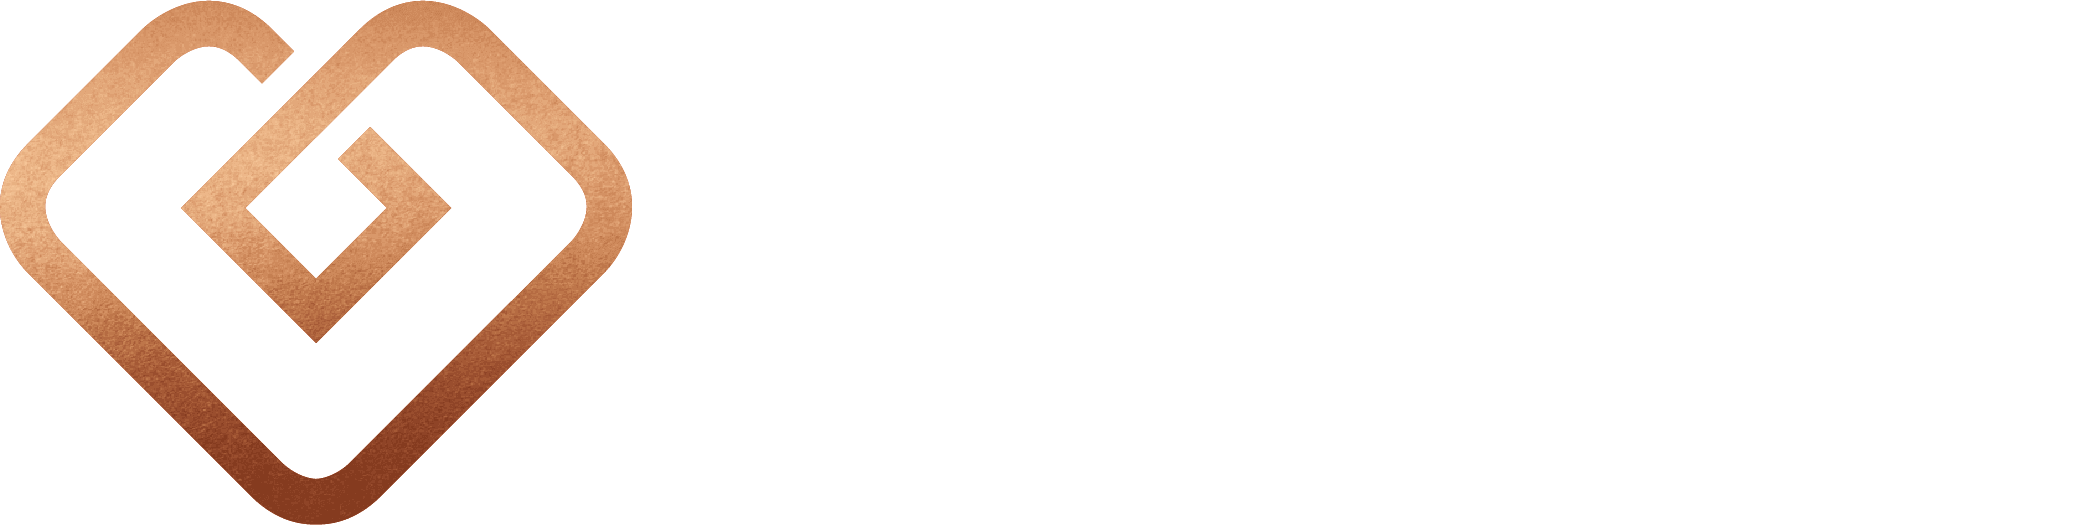 Golden Hill Nursing and Rehabilitation Center Logo